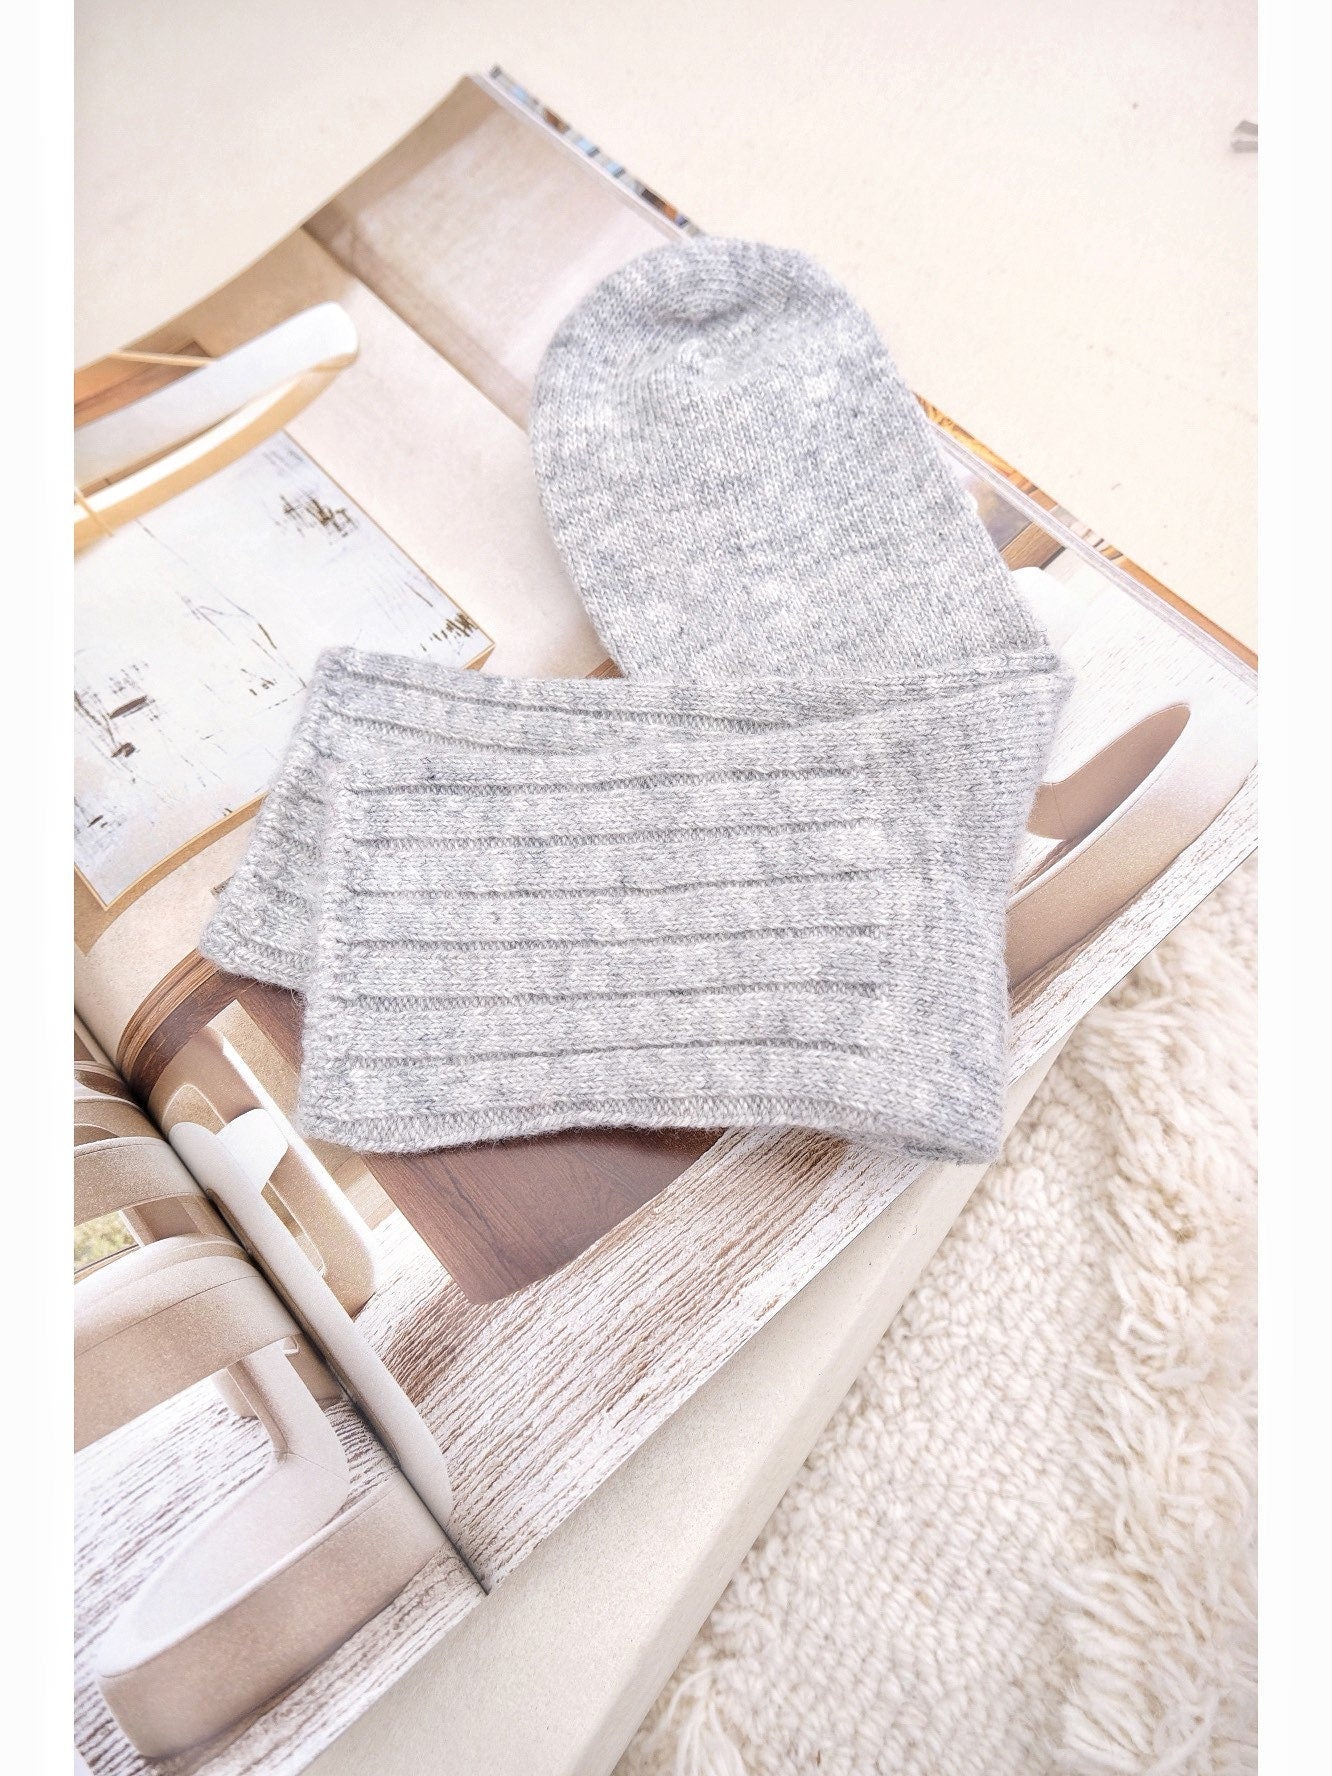 Miss June’s| 1 Pair Wool blended socks|winter| Warm | Soft | High quality| Gift idea | Thanksgiving |women’s socks|Cozy